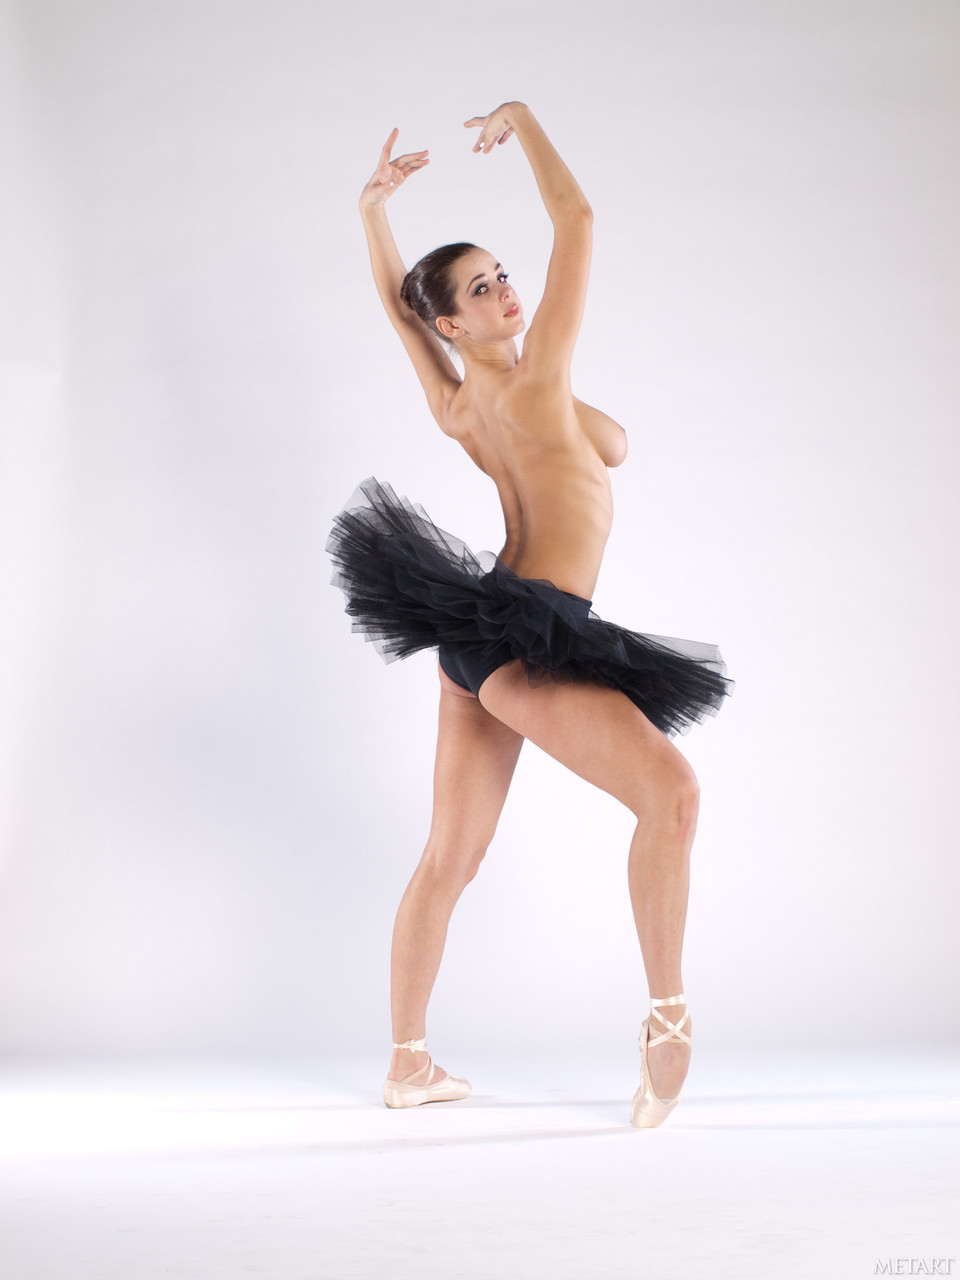 Sexy teen ballerina Bianca C gets naked & shows her big tits and bald pussy 色情照片 #422790314 | Met Art Pics, Bianca C, Ballerina, 手机色情